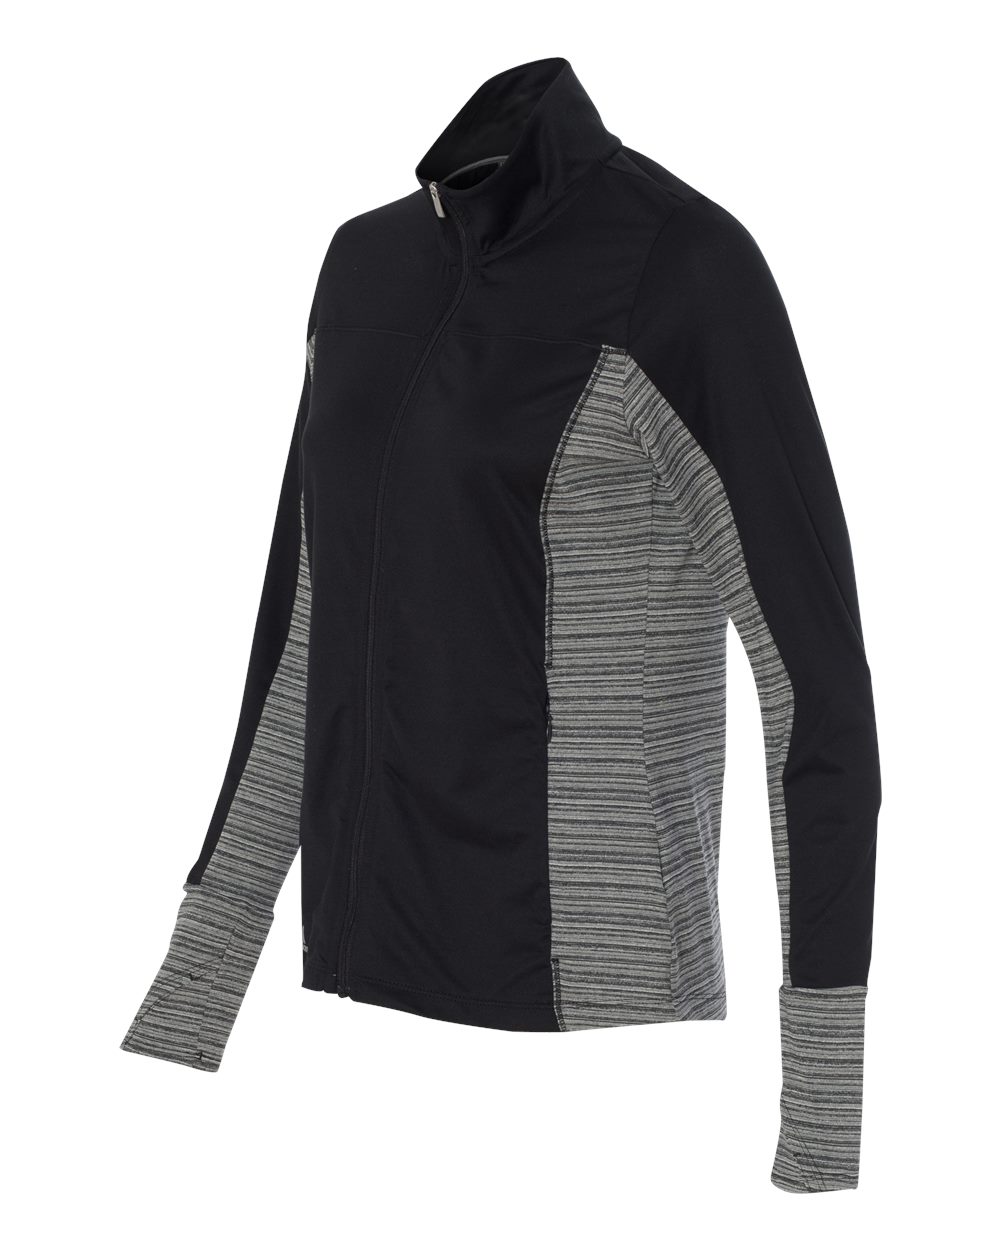 Adidas A202 - Golf Women's Rangewear Full-Zip Jacket